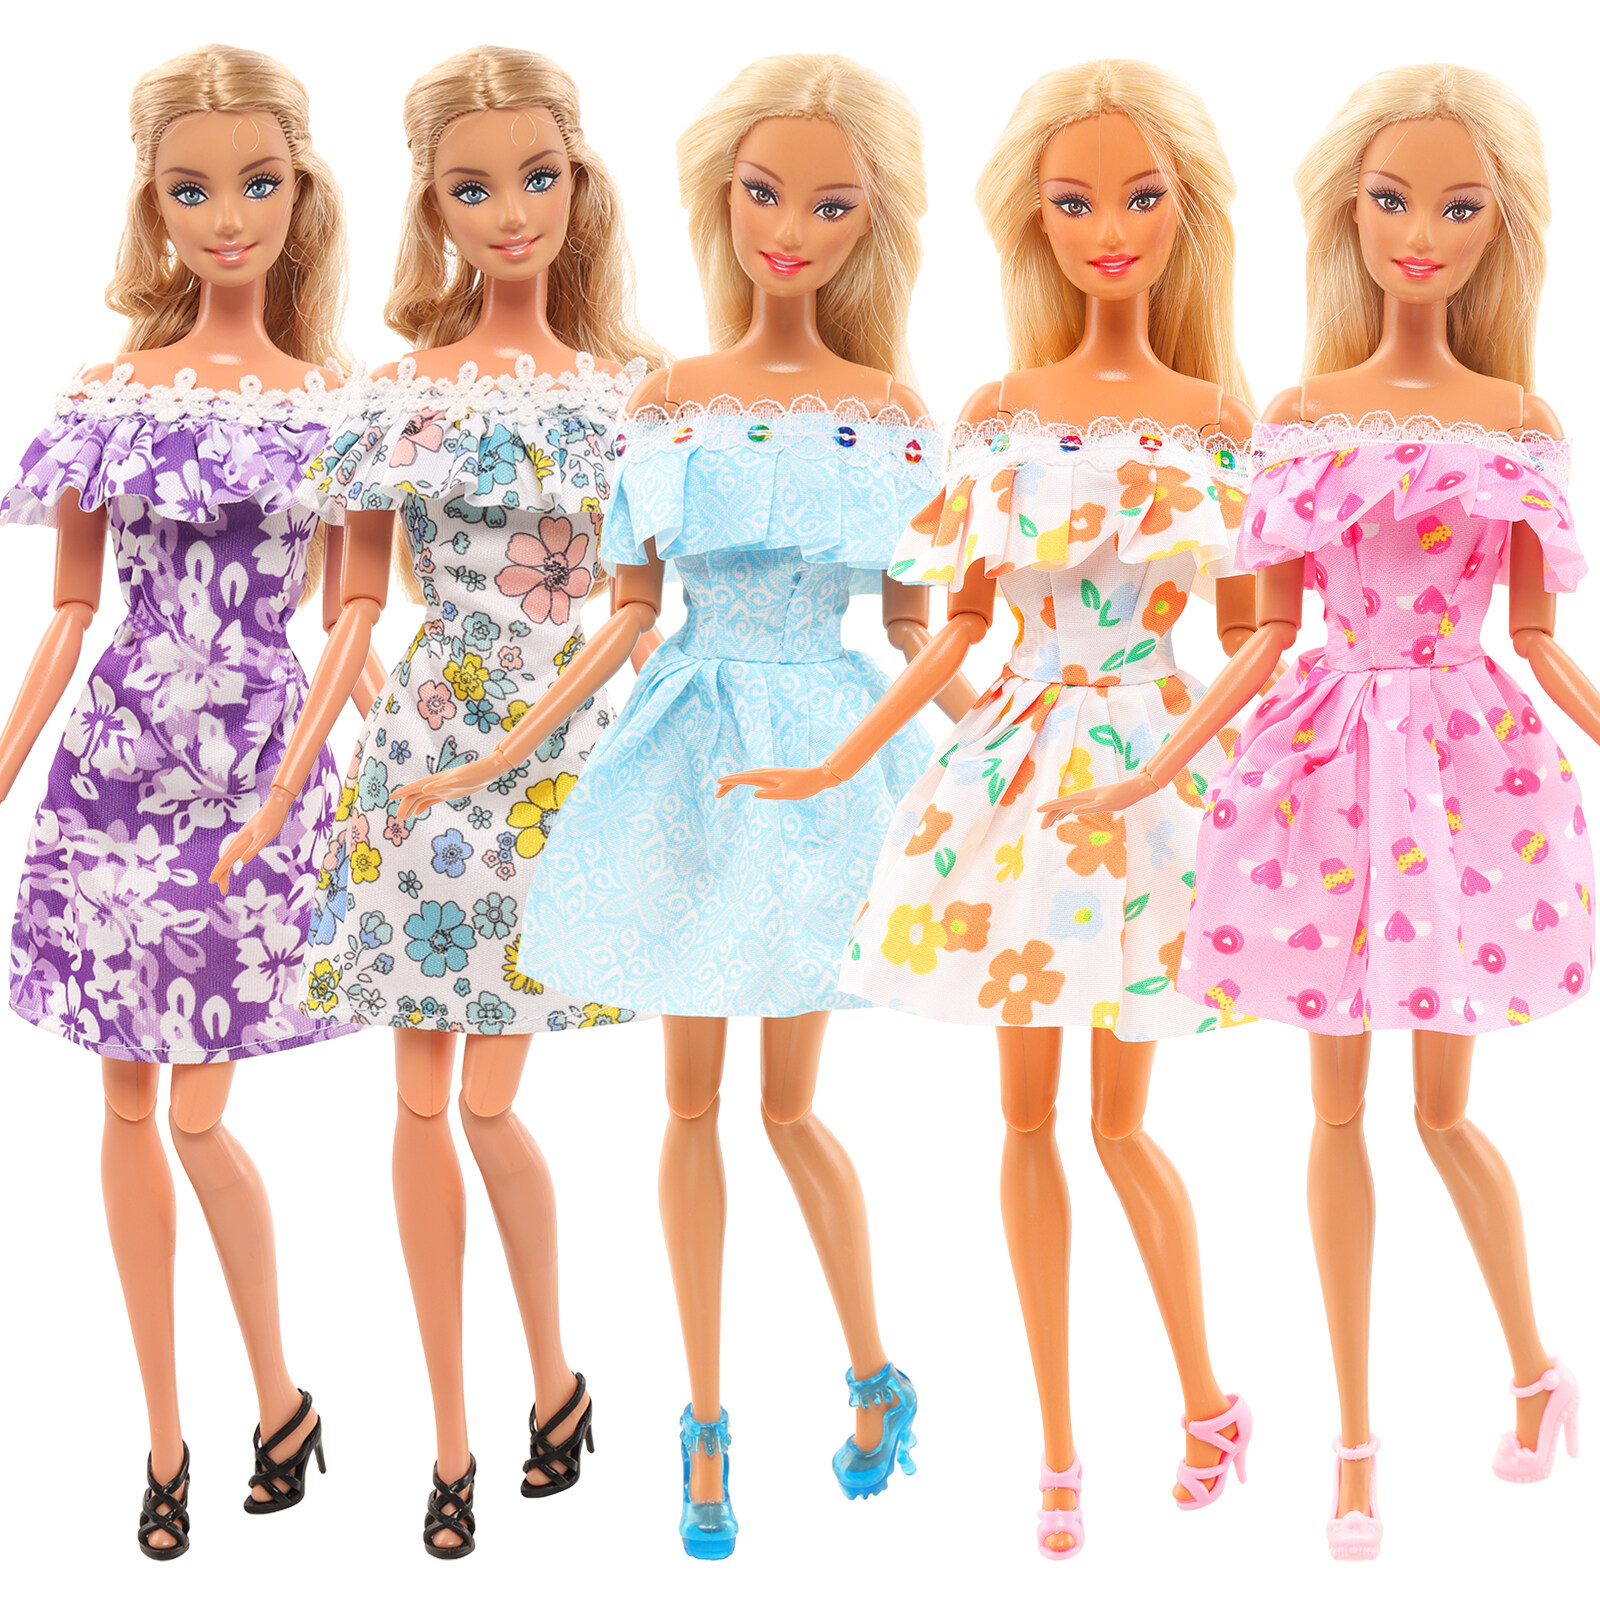 Barwa 30cm For Barbie Doll Toy 5 Pcs Fashionable Flowers Line Neck Dress